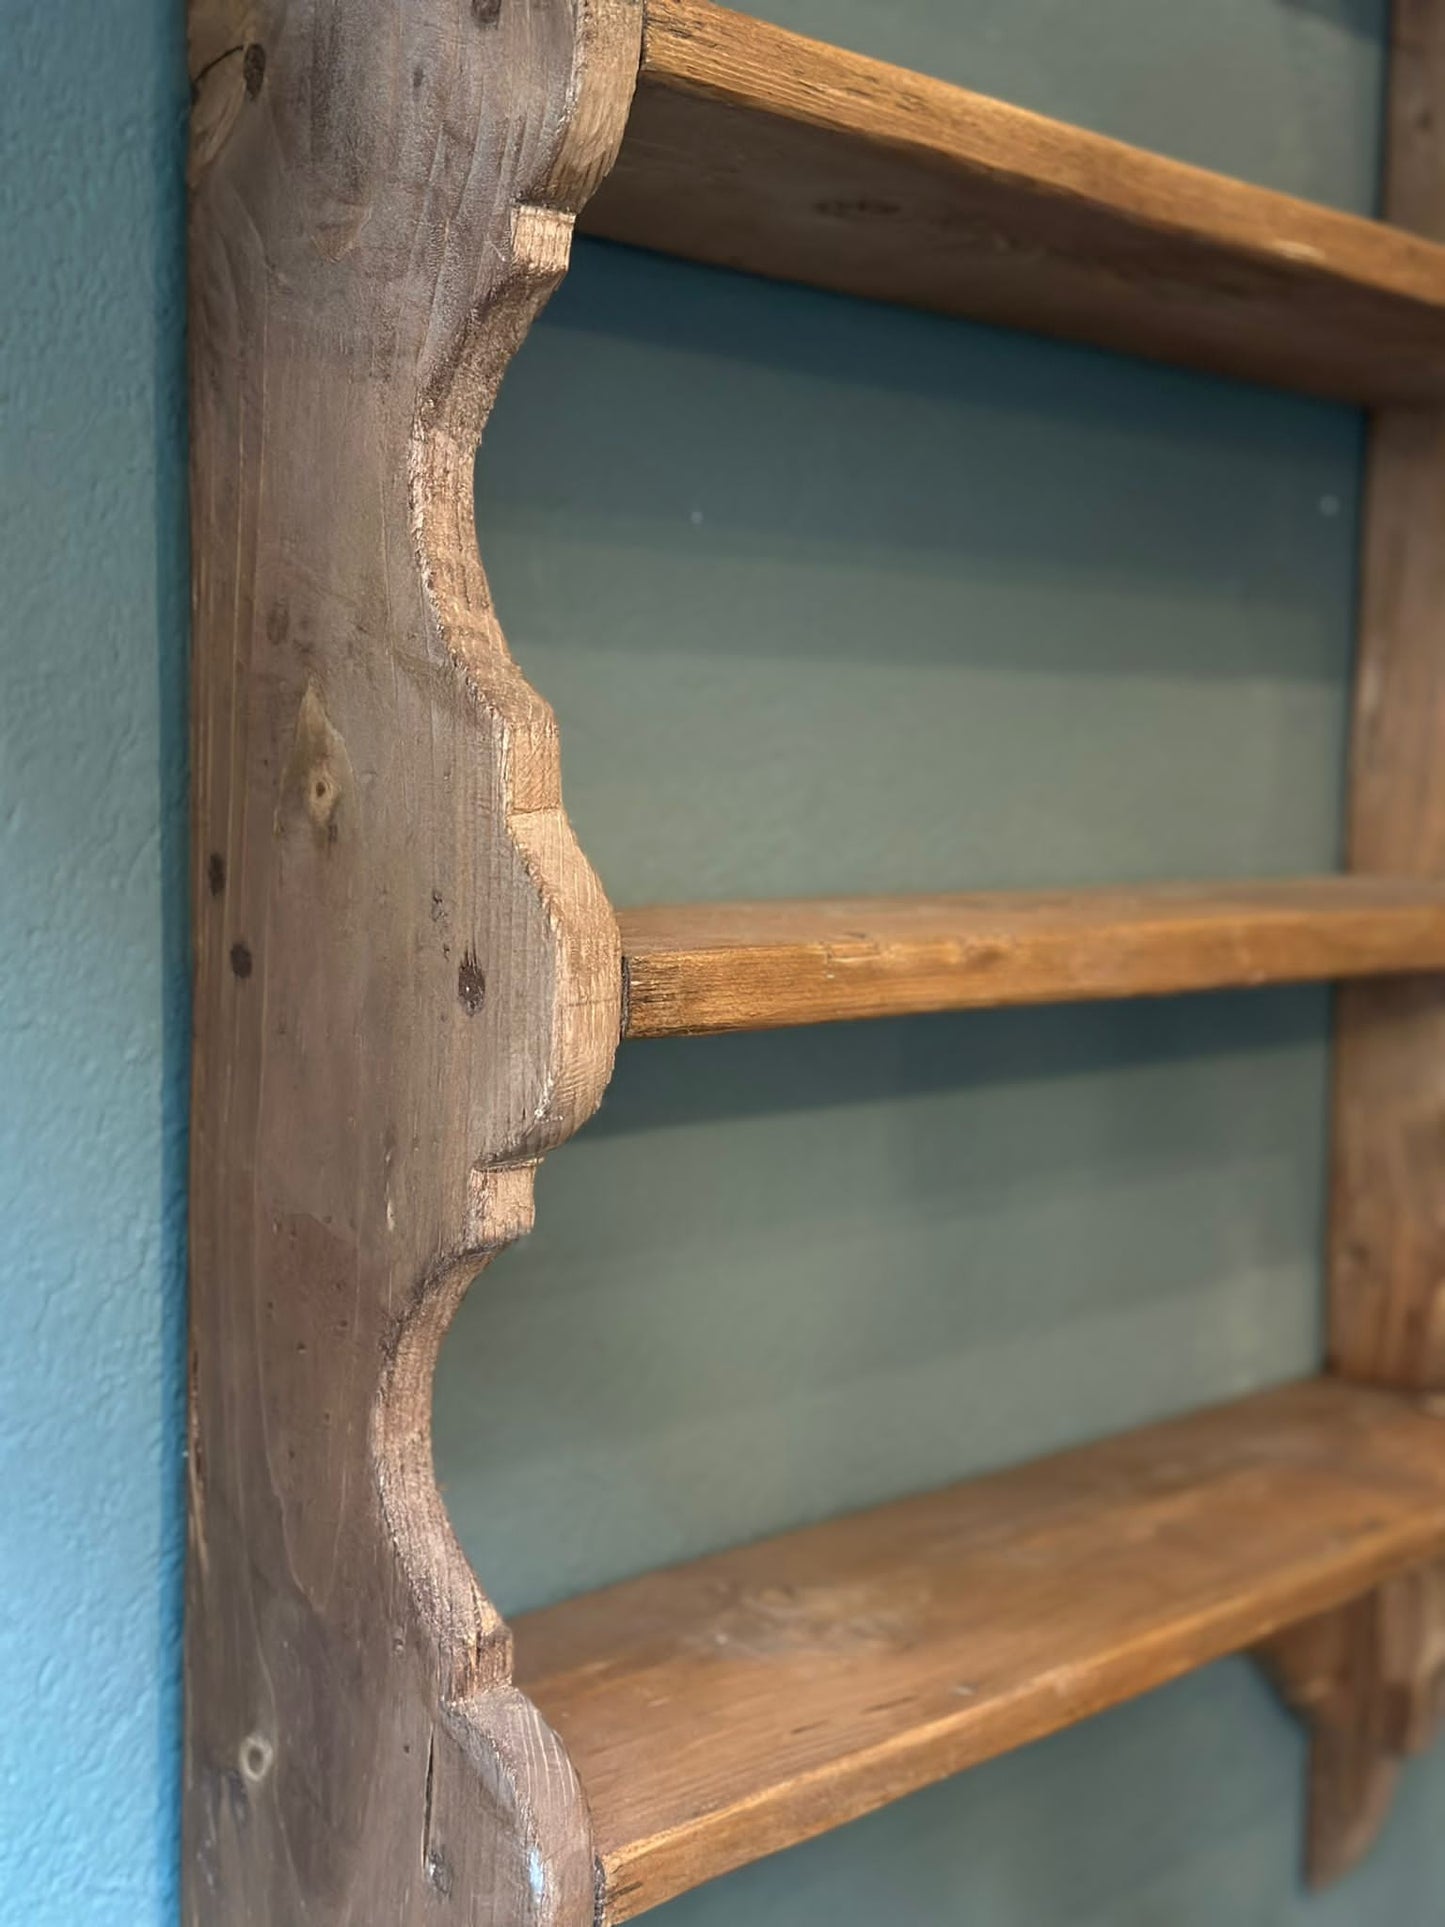 Antique Wooden Shelf